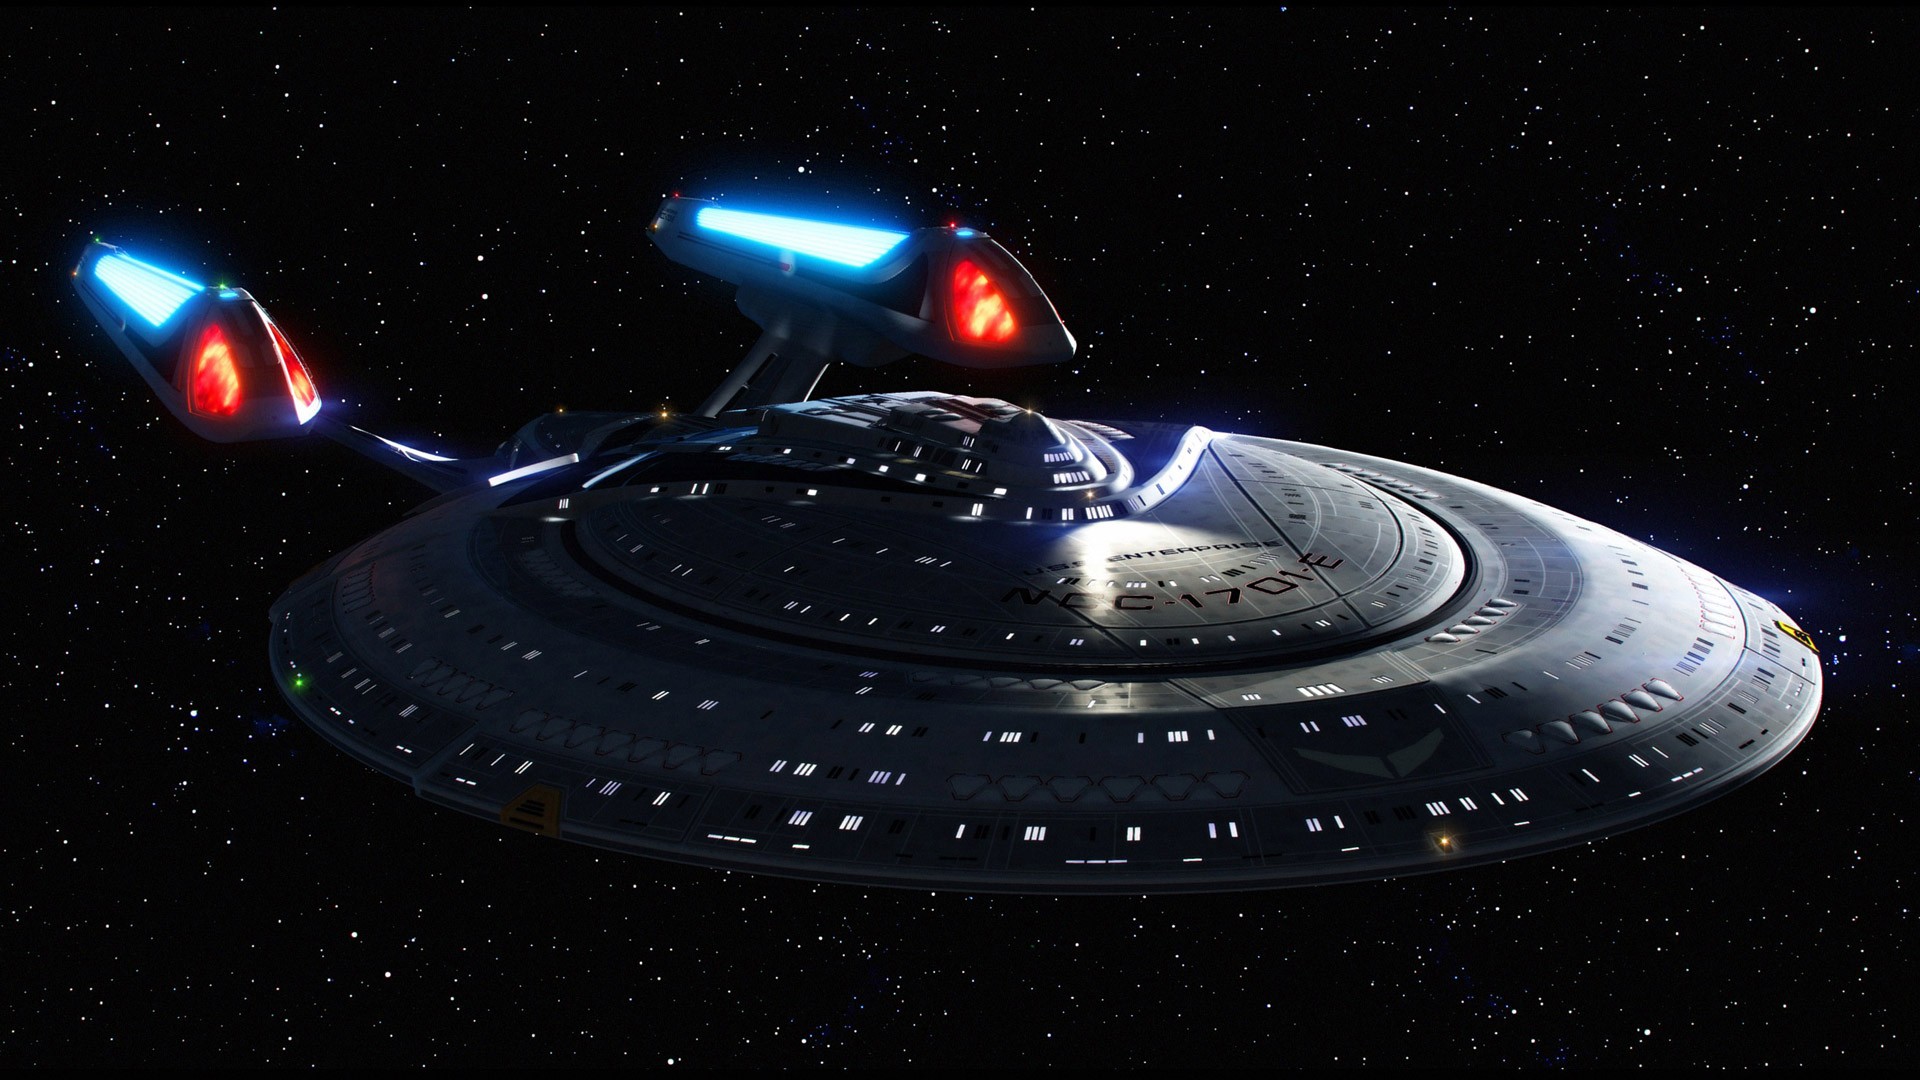 General 1920x1080 Star Trek USS Enterprise (spaceship) Star Trek Ships NCC-1701 enterprise e spaceship film stills vehicle movies